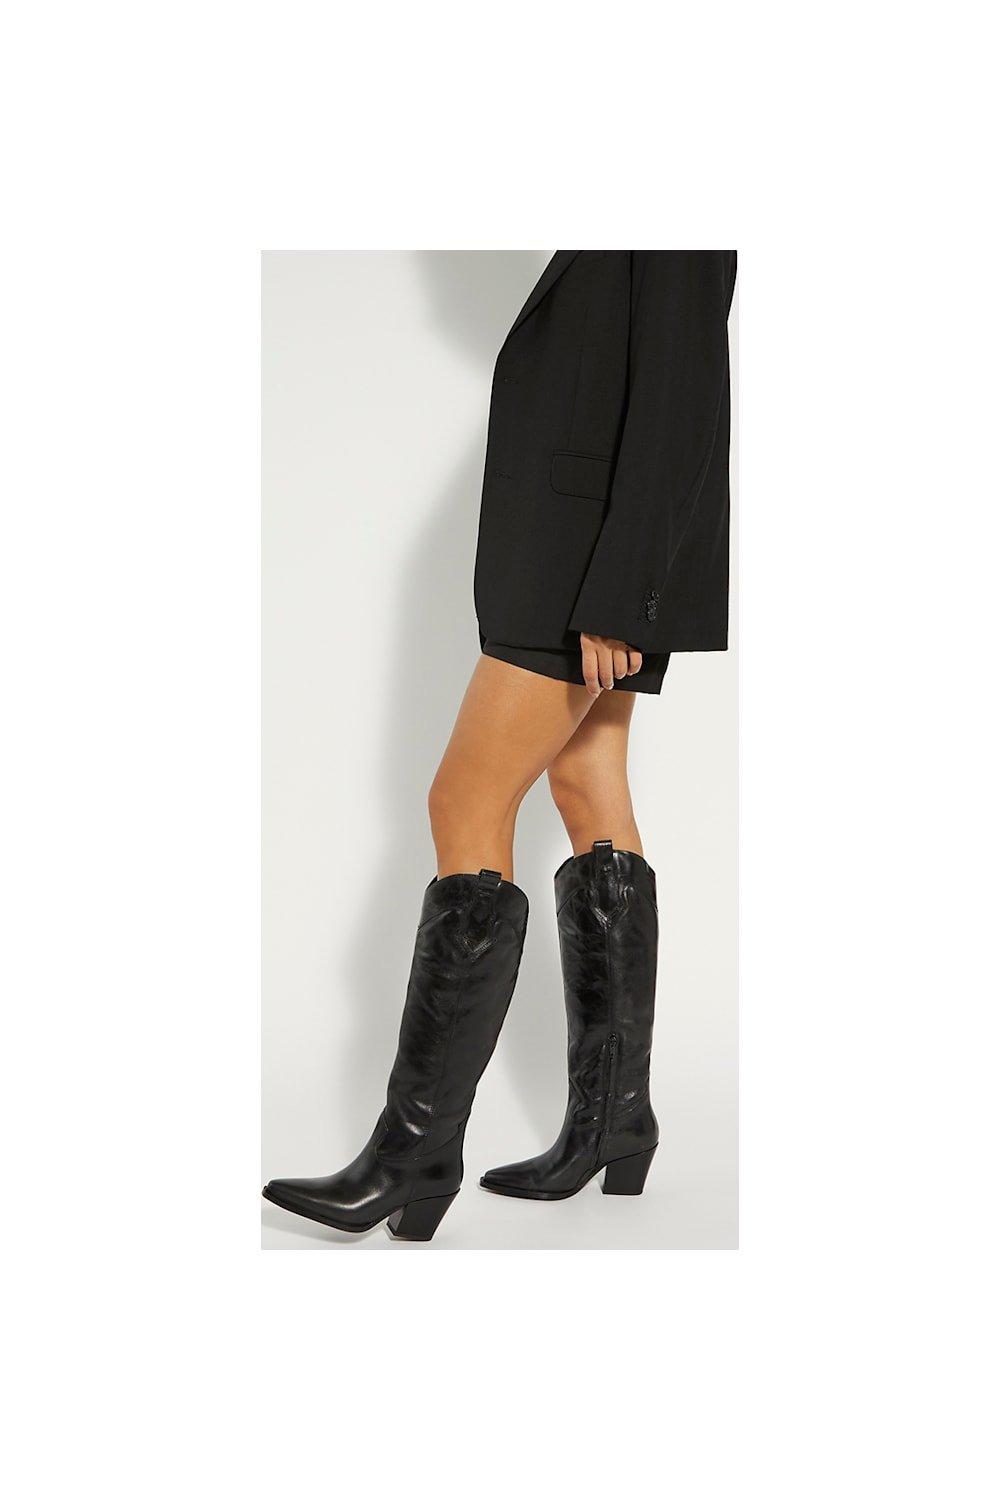 Zara - Knee High Mixed Suede Cowboy Boots - Black - Women